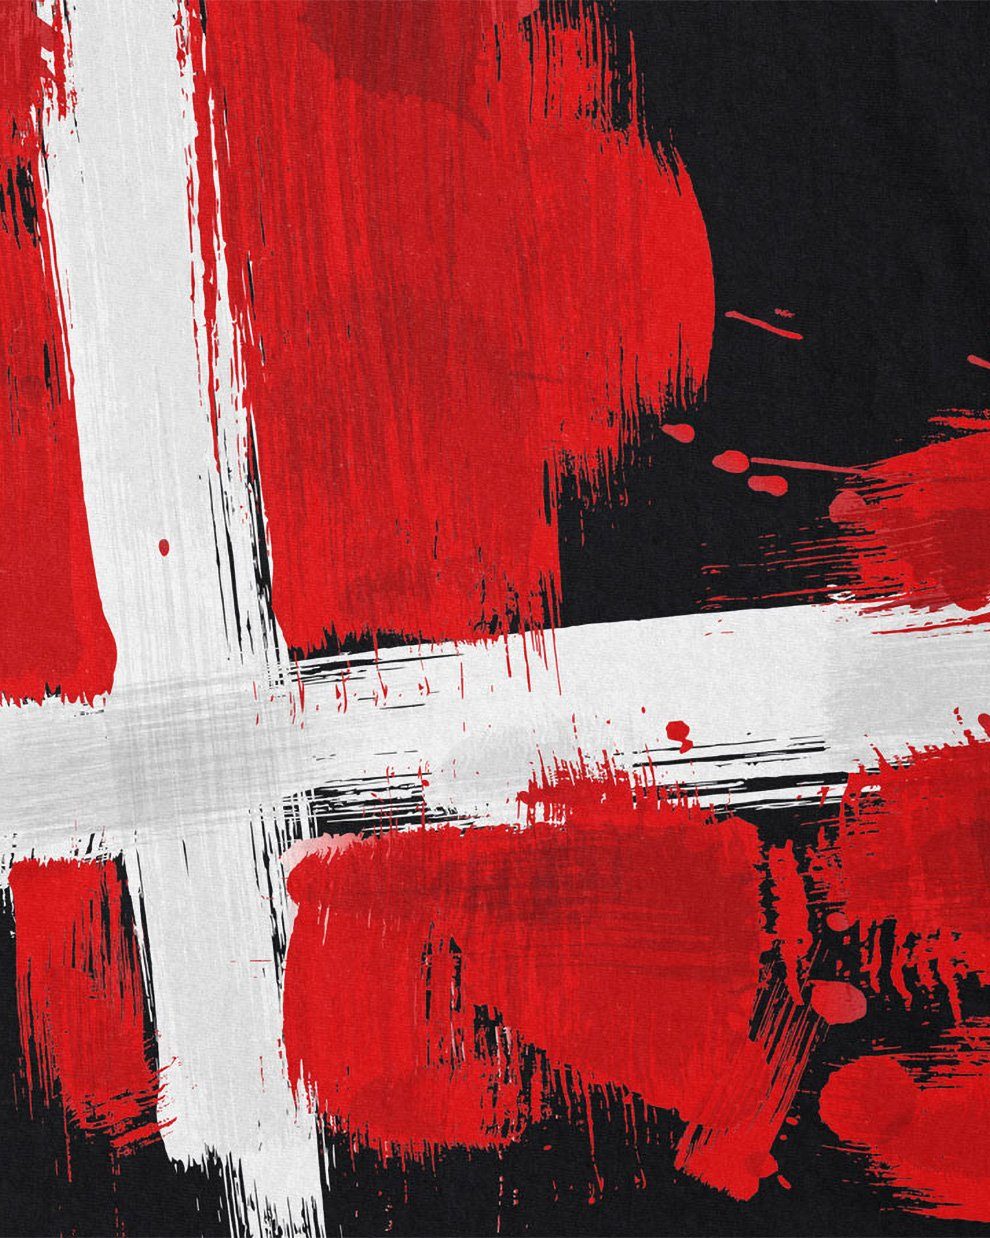 EM Print-Shirt Dänemark Denmark Fußball schwarz T-Shirt WM style3 Flagge Fahne Sport Herren